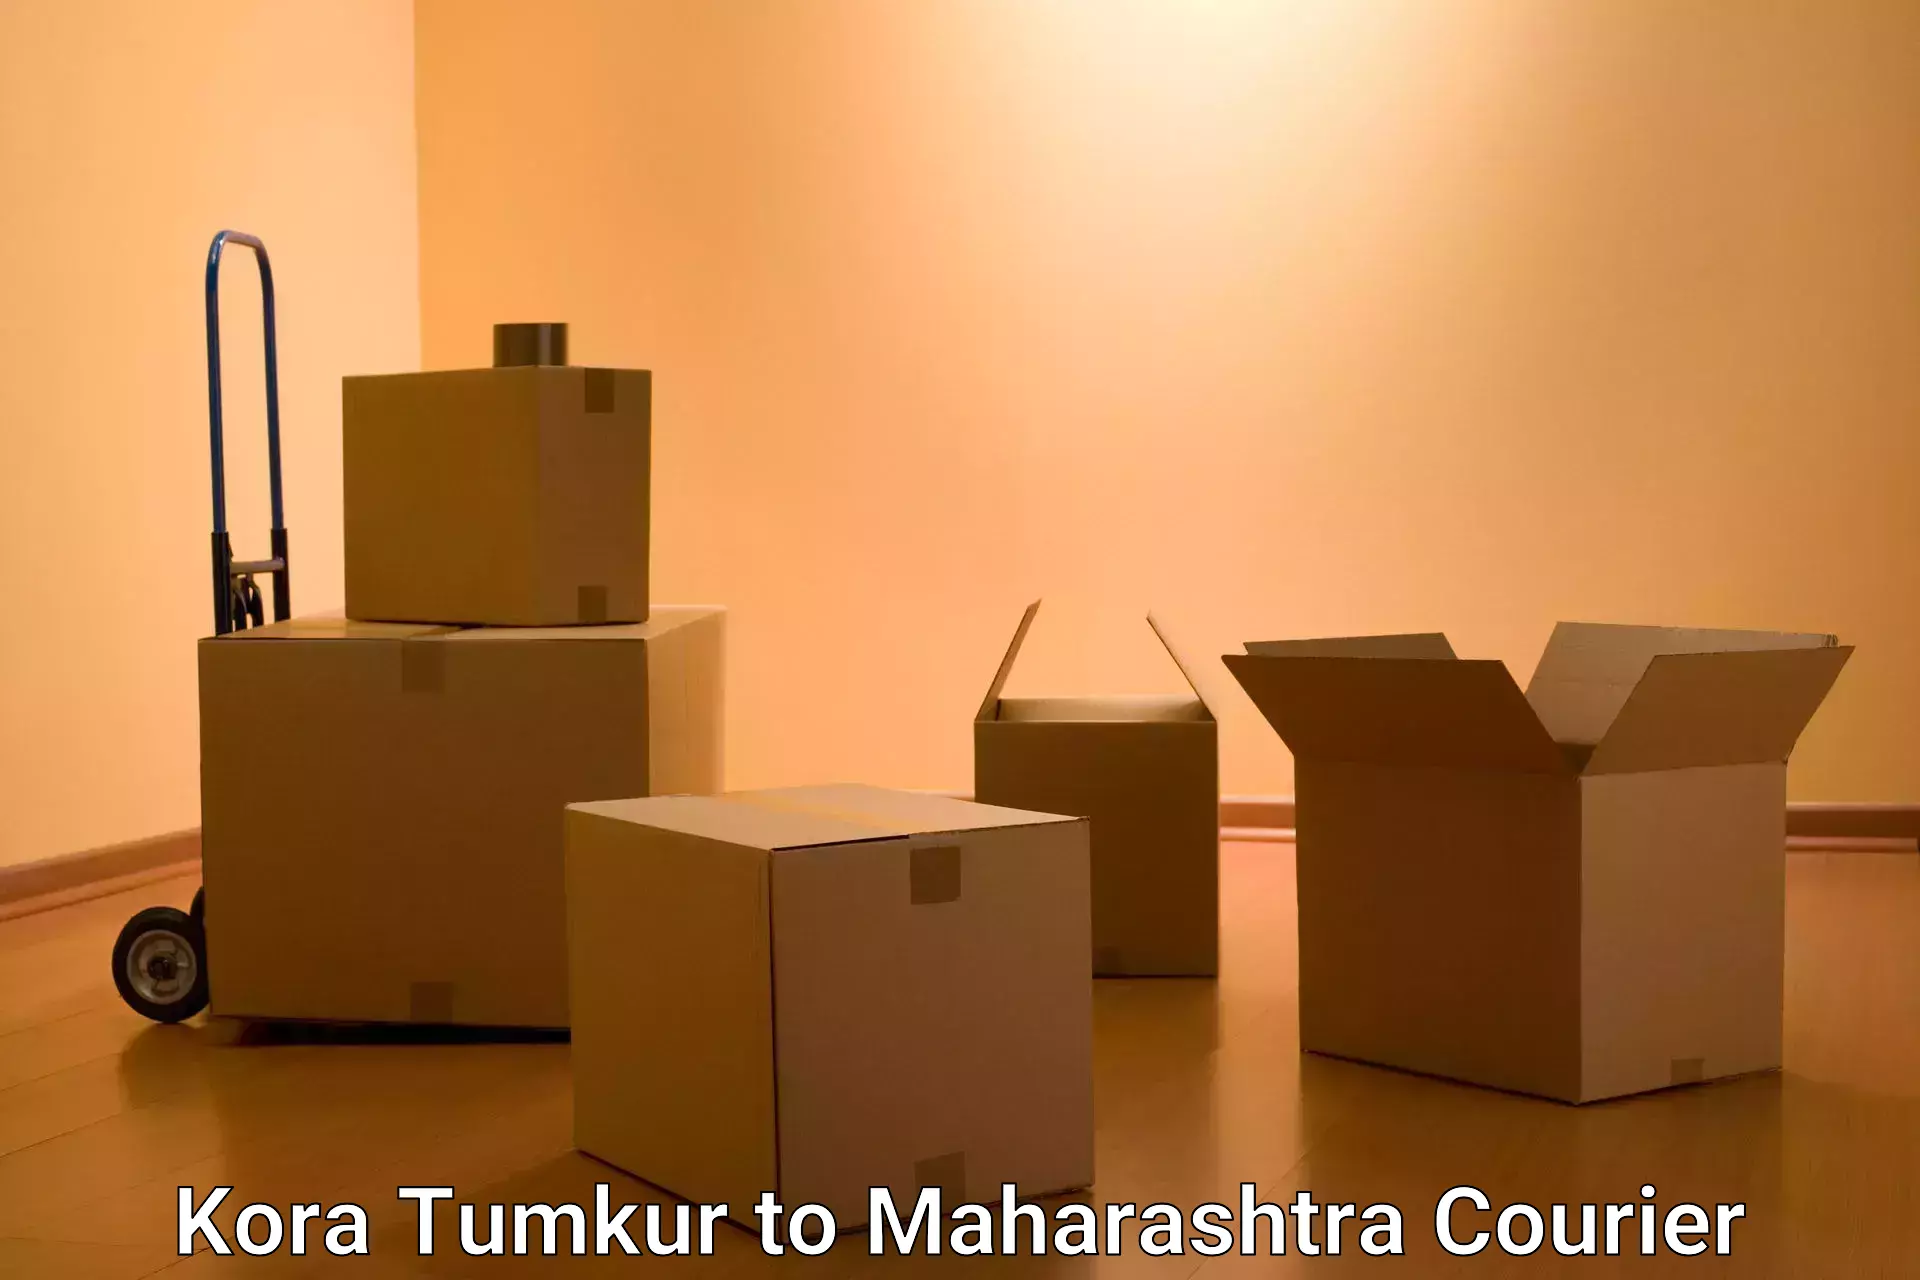 Courier service partnerships Kora Tumkur to Maharashtra